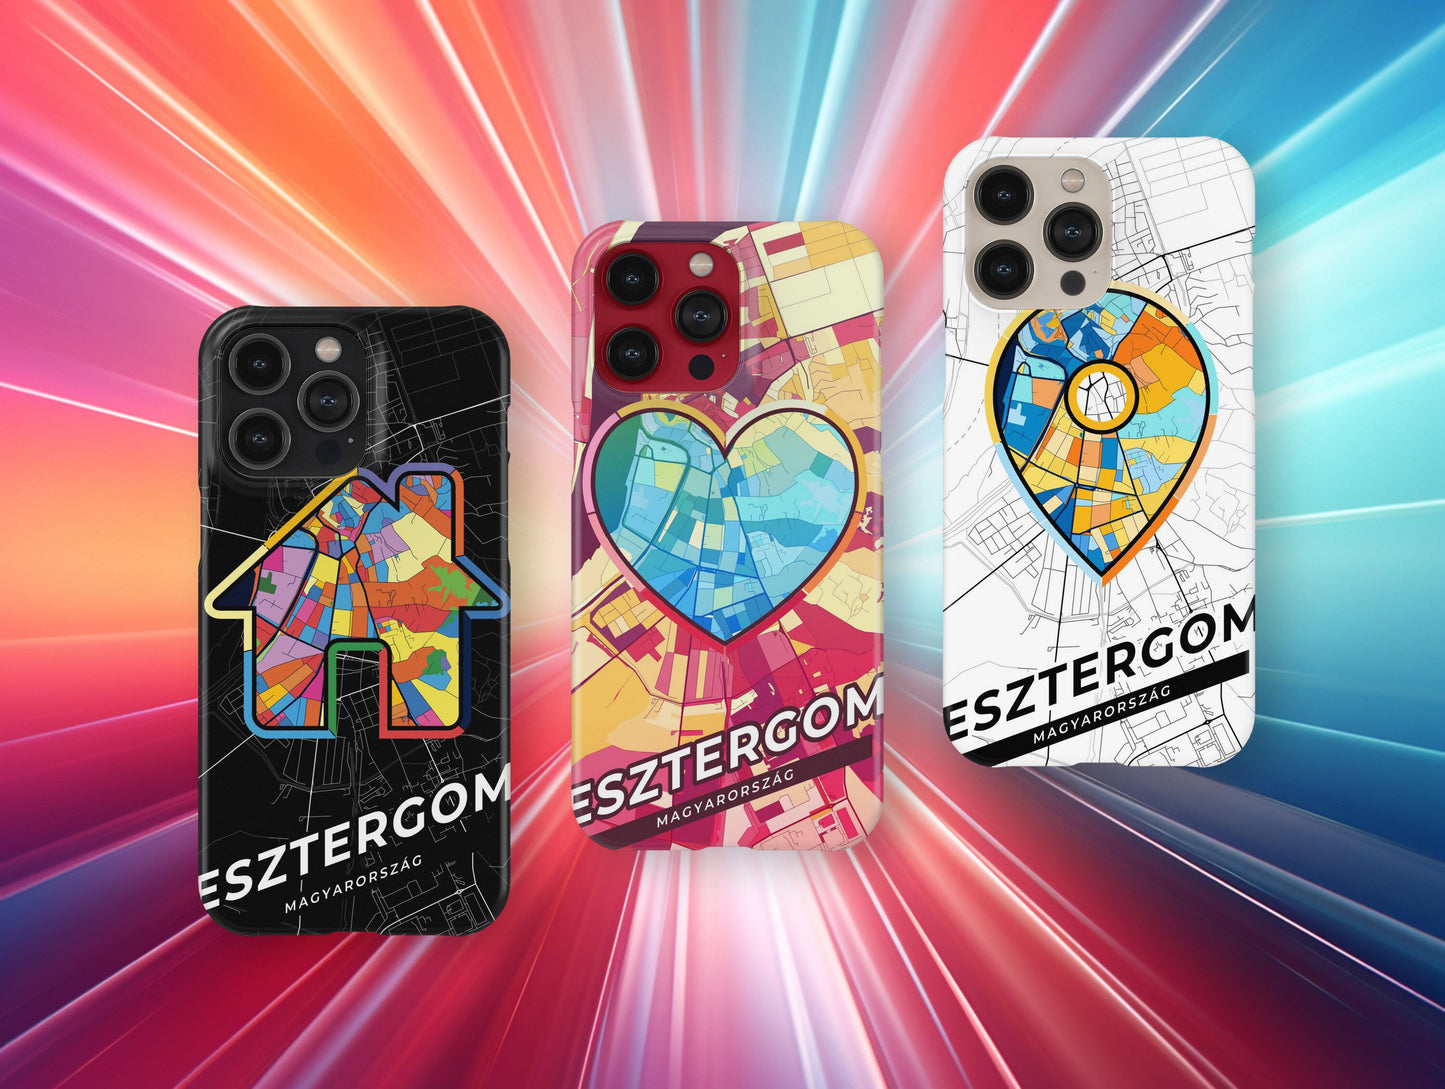 Esztergom Hungary slim phone case with colorful icon. Birthday, wedding or housewarming gift. Couple match cases.